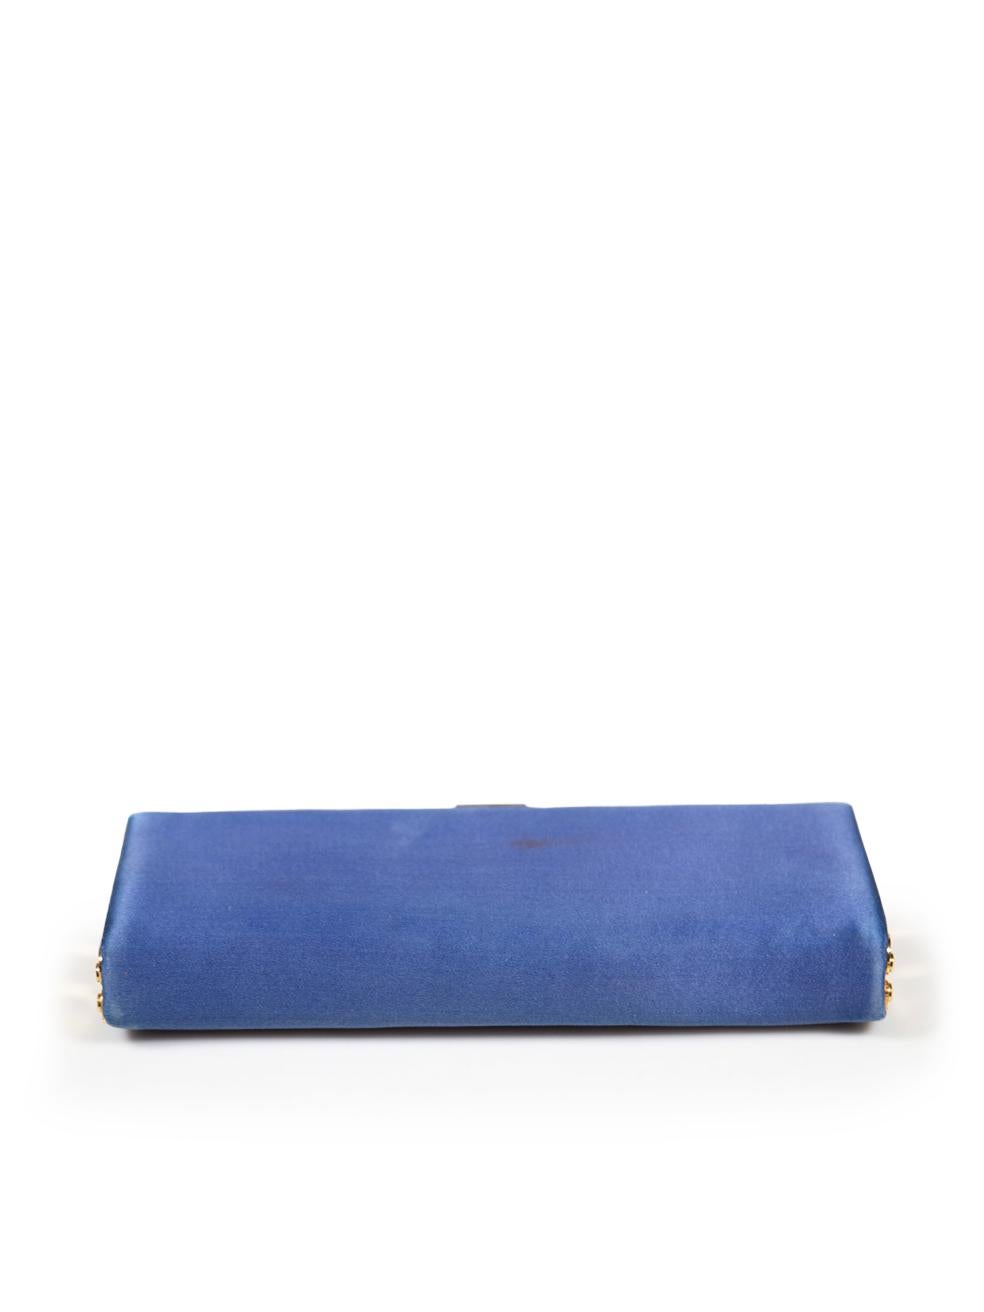 Women's Christian Louboutin Blue & Gold Frame Clutch Bag For Sale